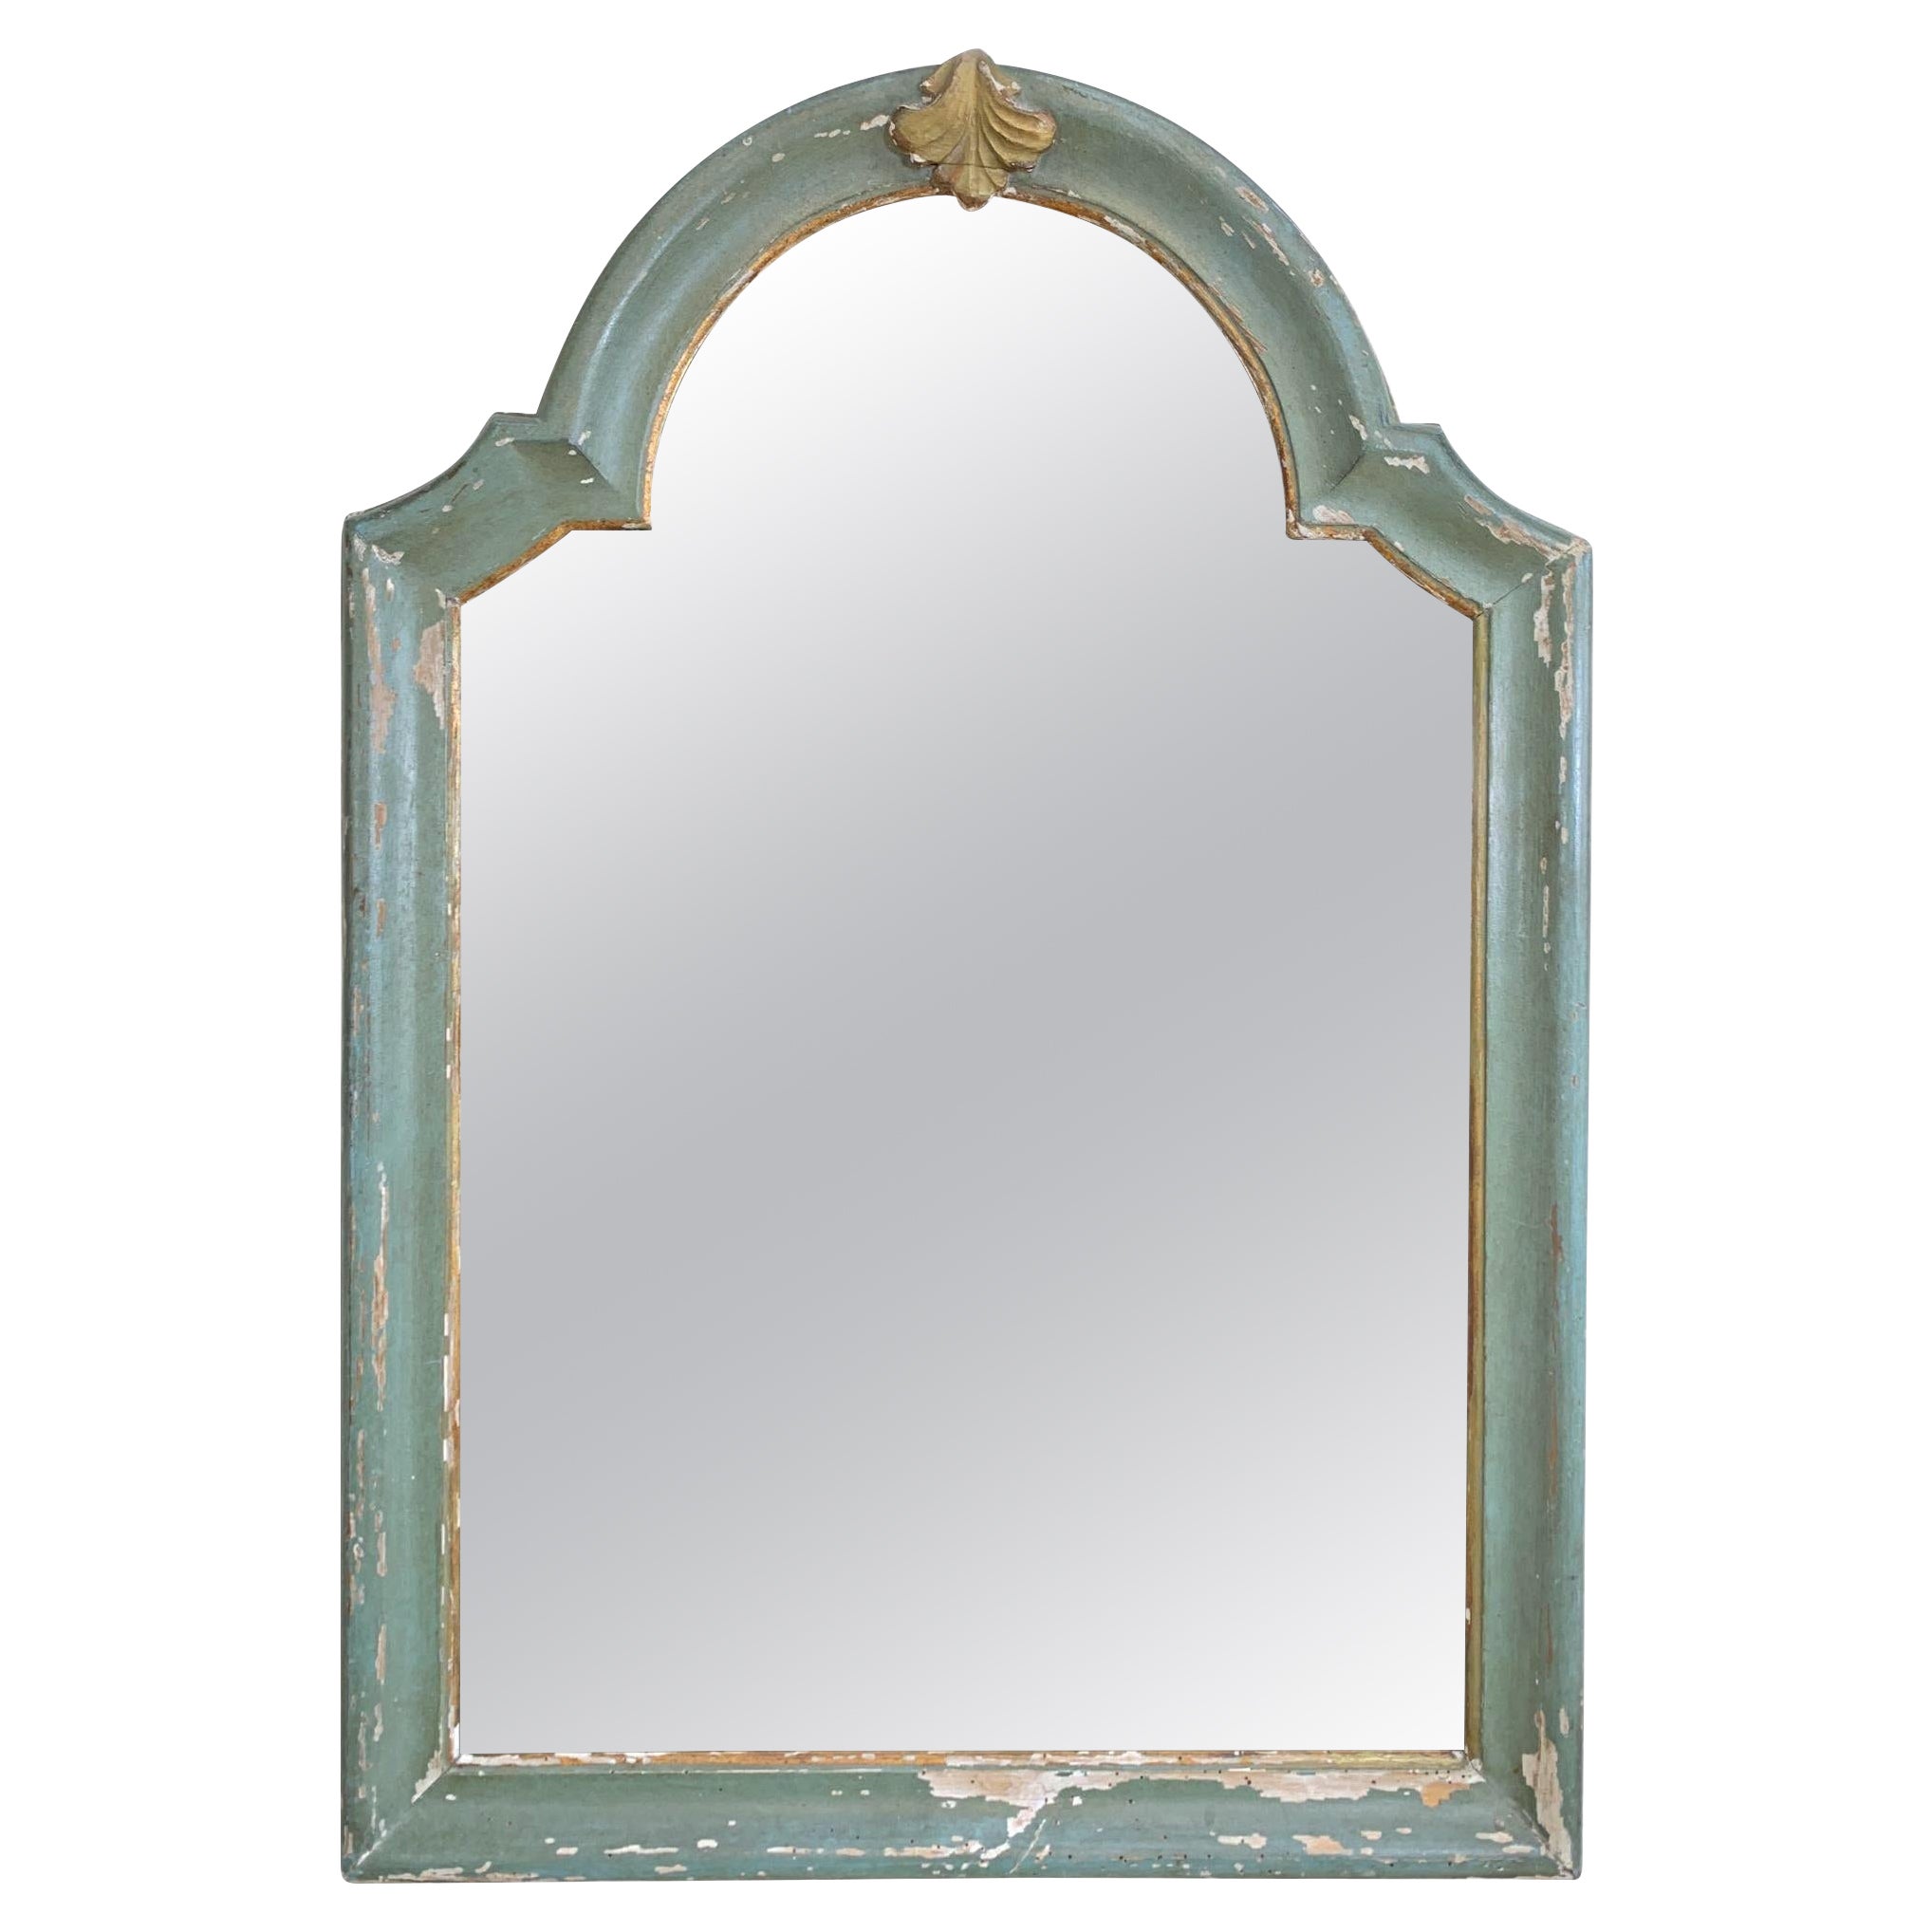  19th Century Green French Arch Top Mercury Mirror